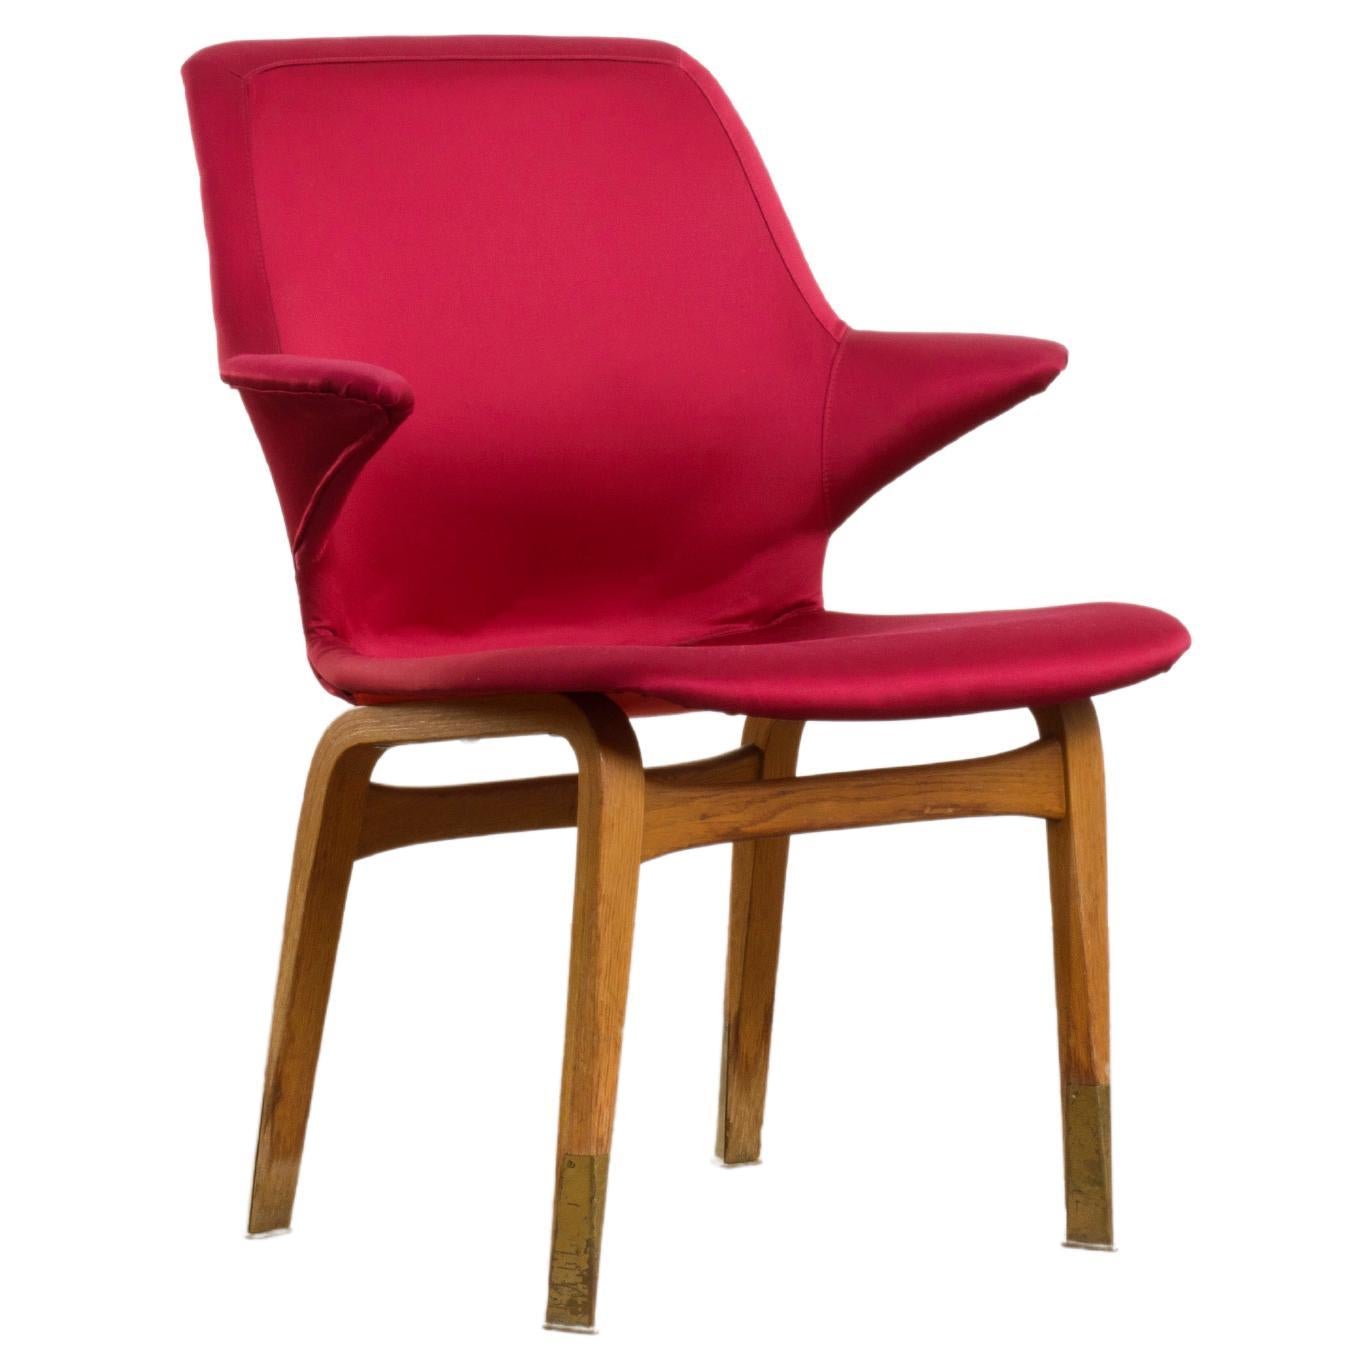 Chairs Lulu-Ilmari Tapiovaara-Finland-Mid 20th Century-Manufactured by Asko